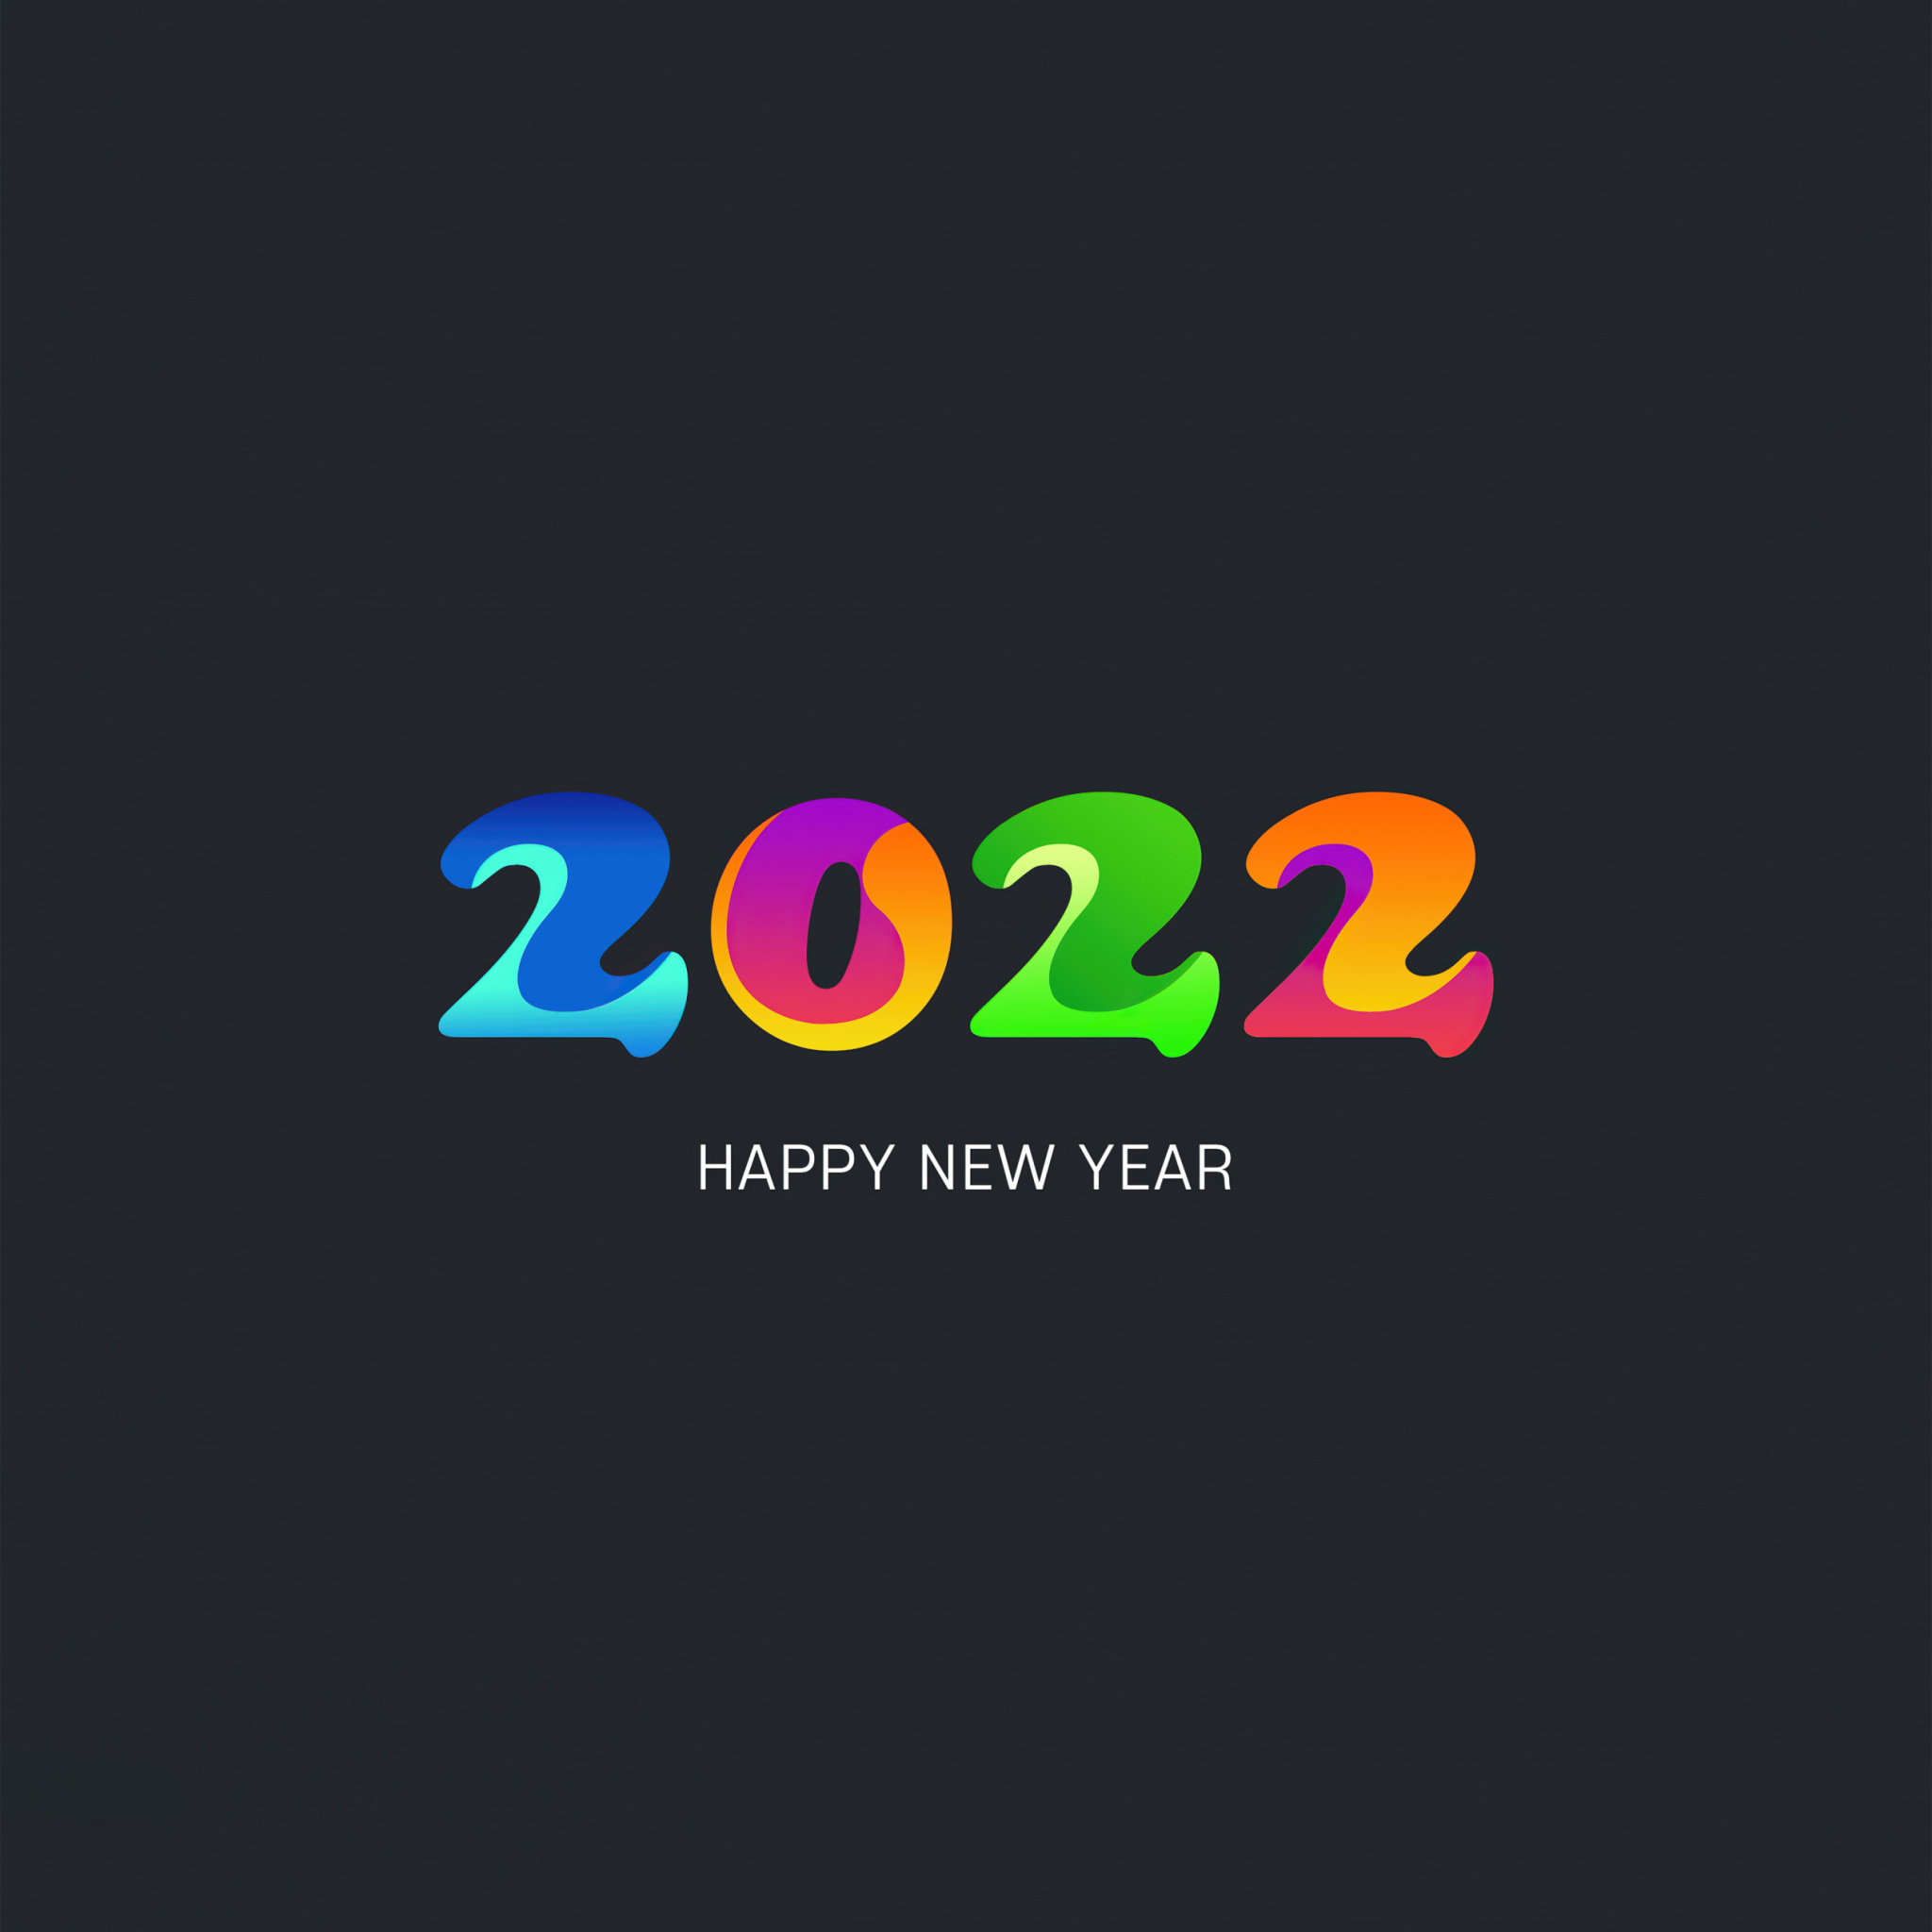 Happy new year 2022 wallpaper 2048x2048